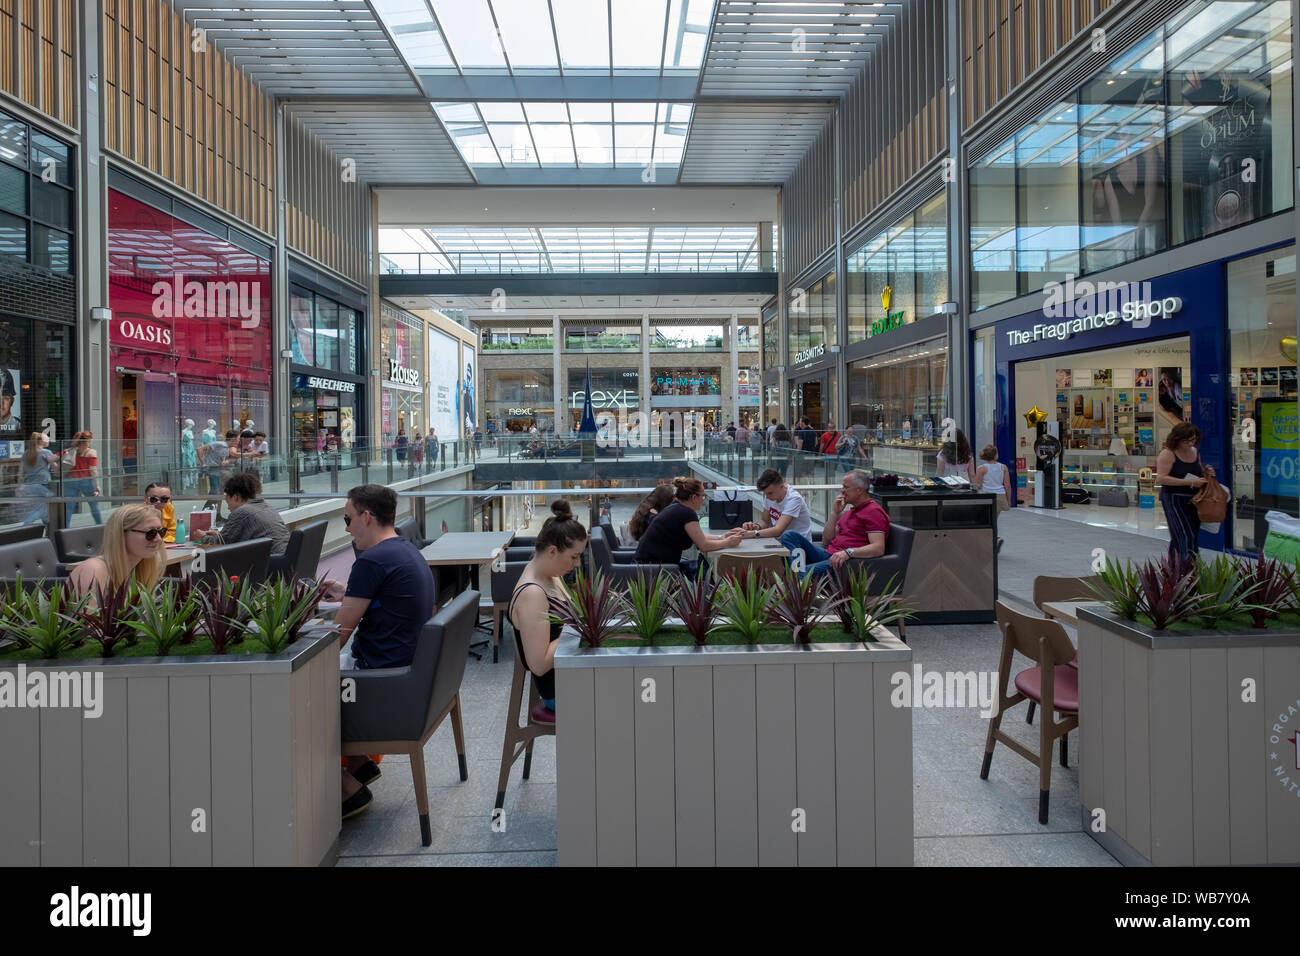 Westgate Shopping Center Oxford Foto Stock